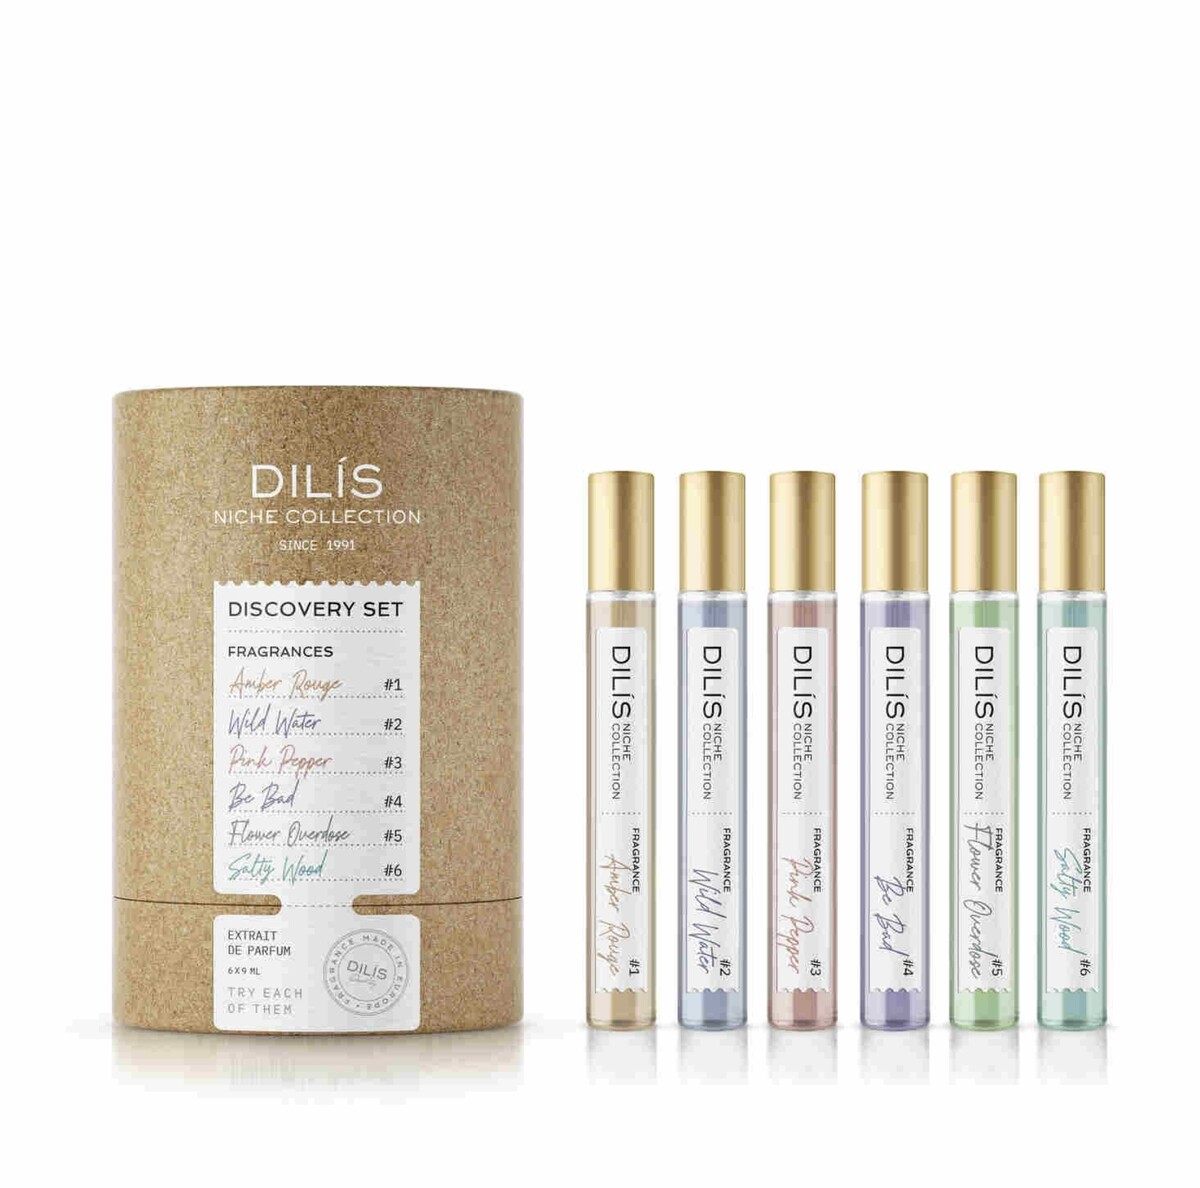 Dilis discovery set dnc духи для женщин парфюмерный набор (6*9мл) 54мл духи экстра dilis classic collection